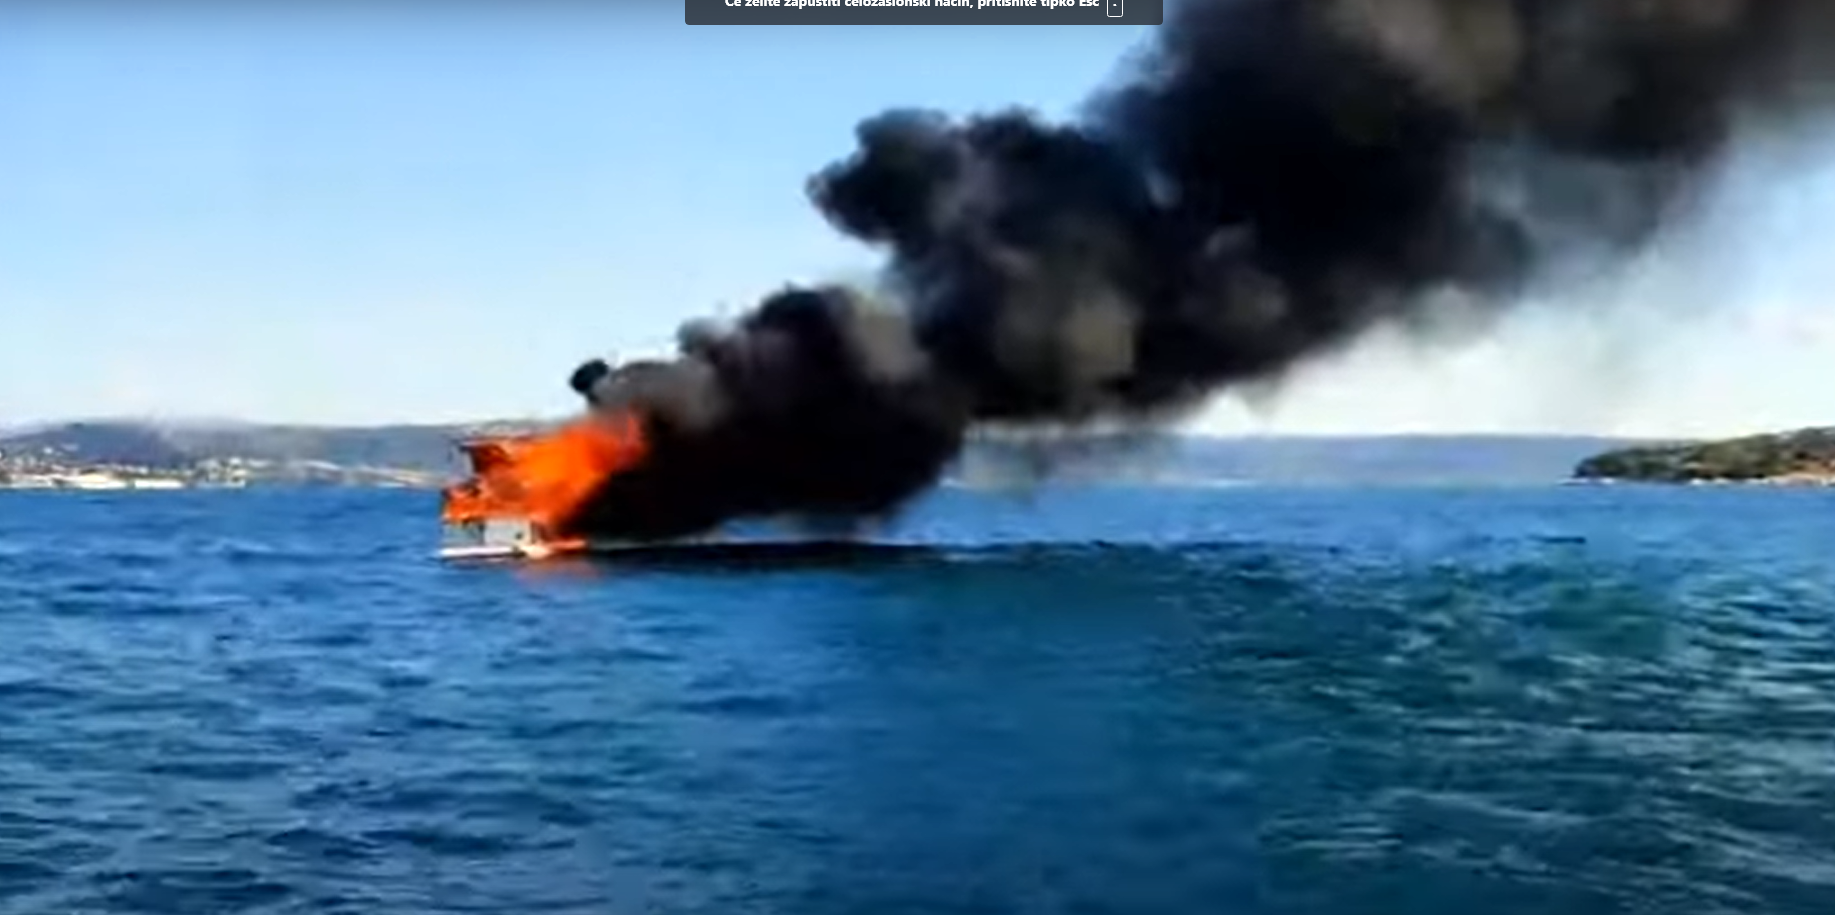 VIDEO: V Piranskem zalivu zagorela hrvaška ribiška ladja